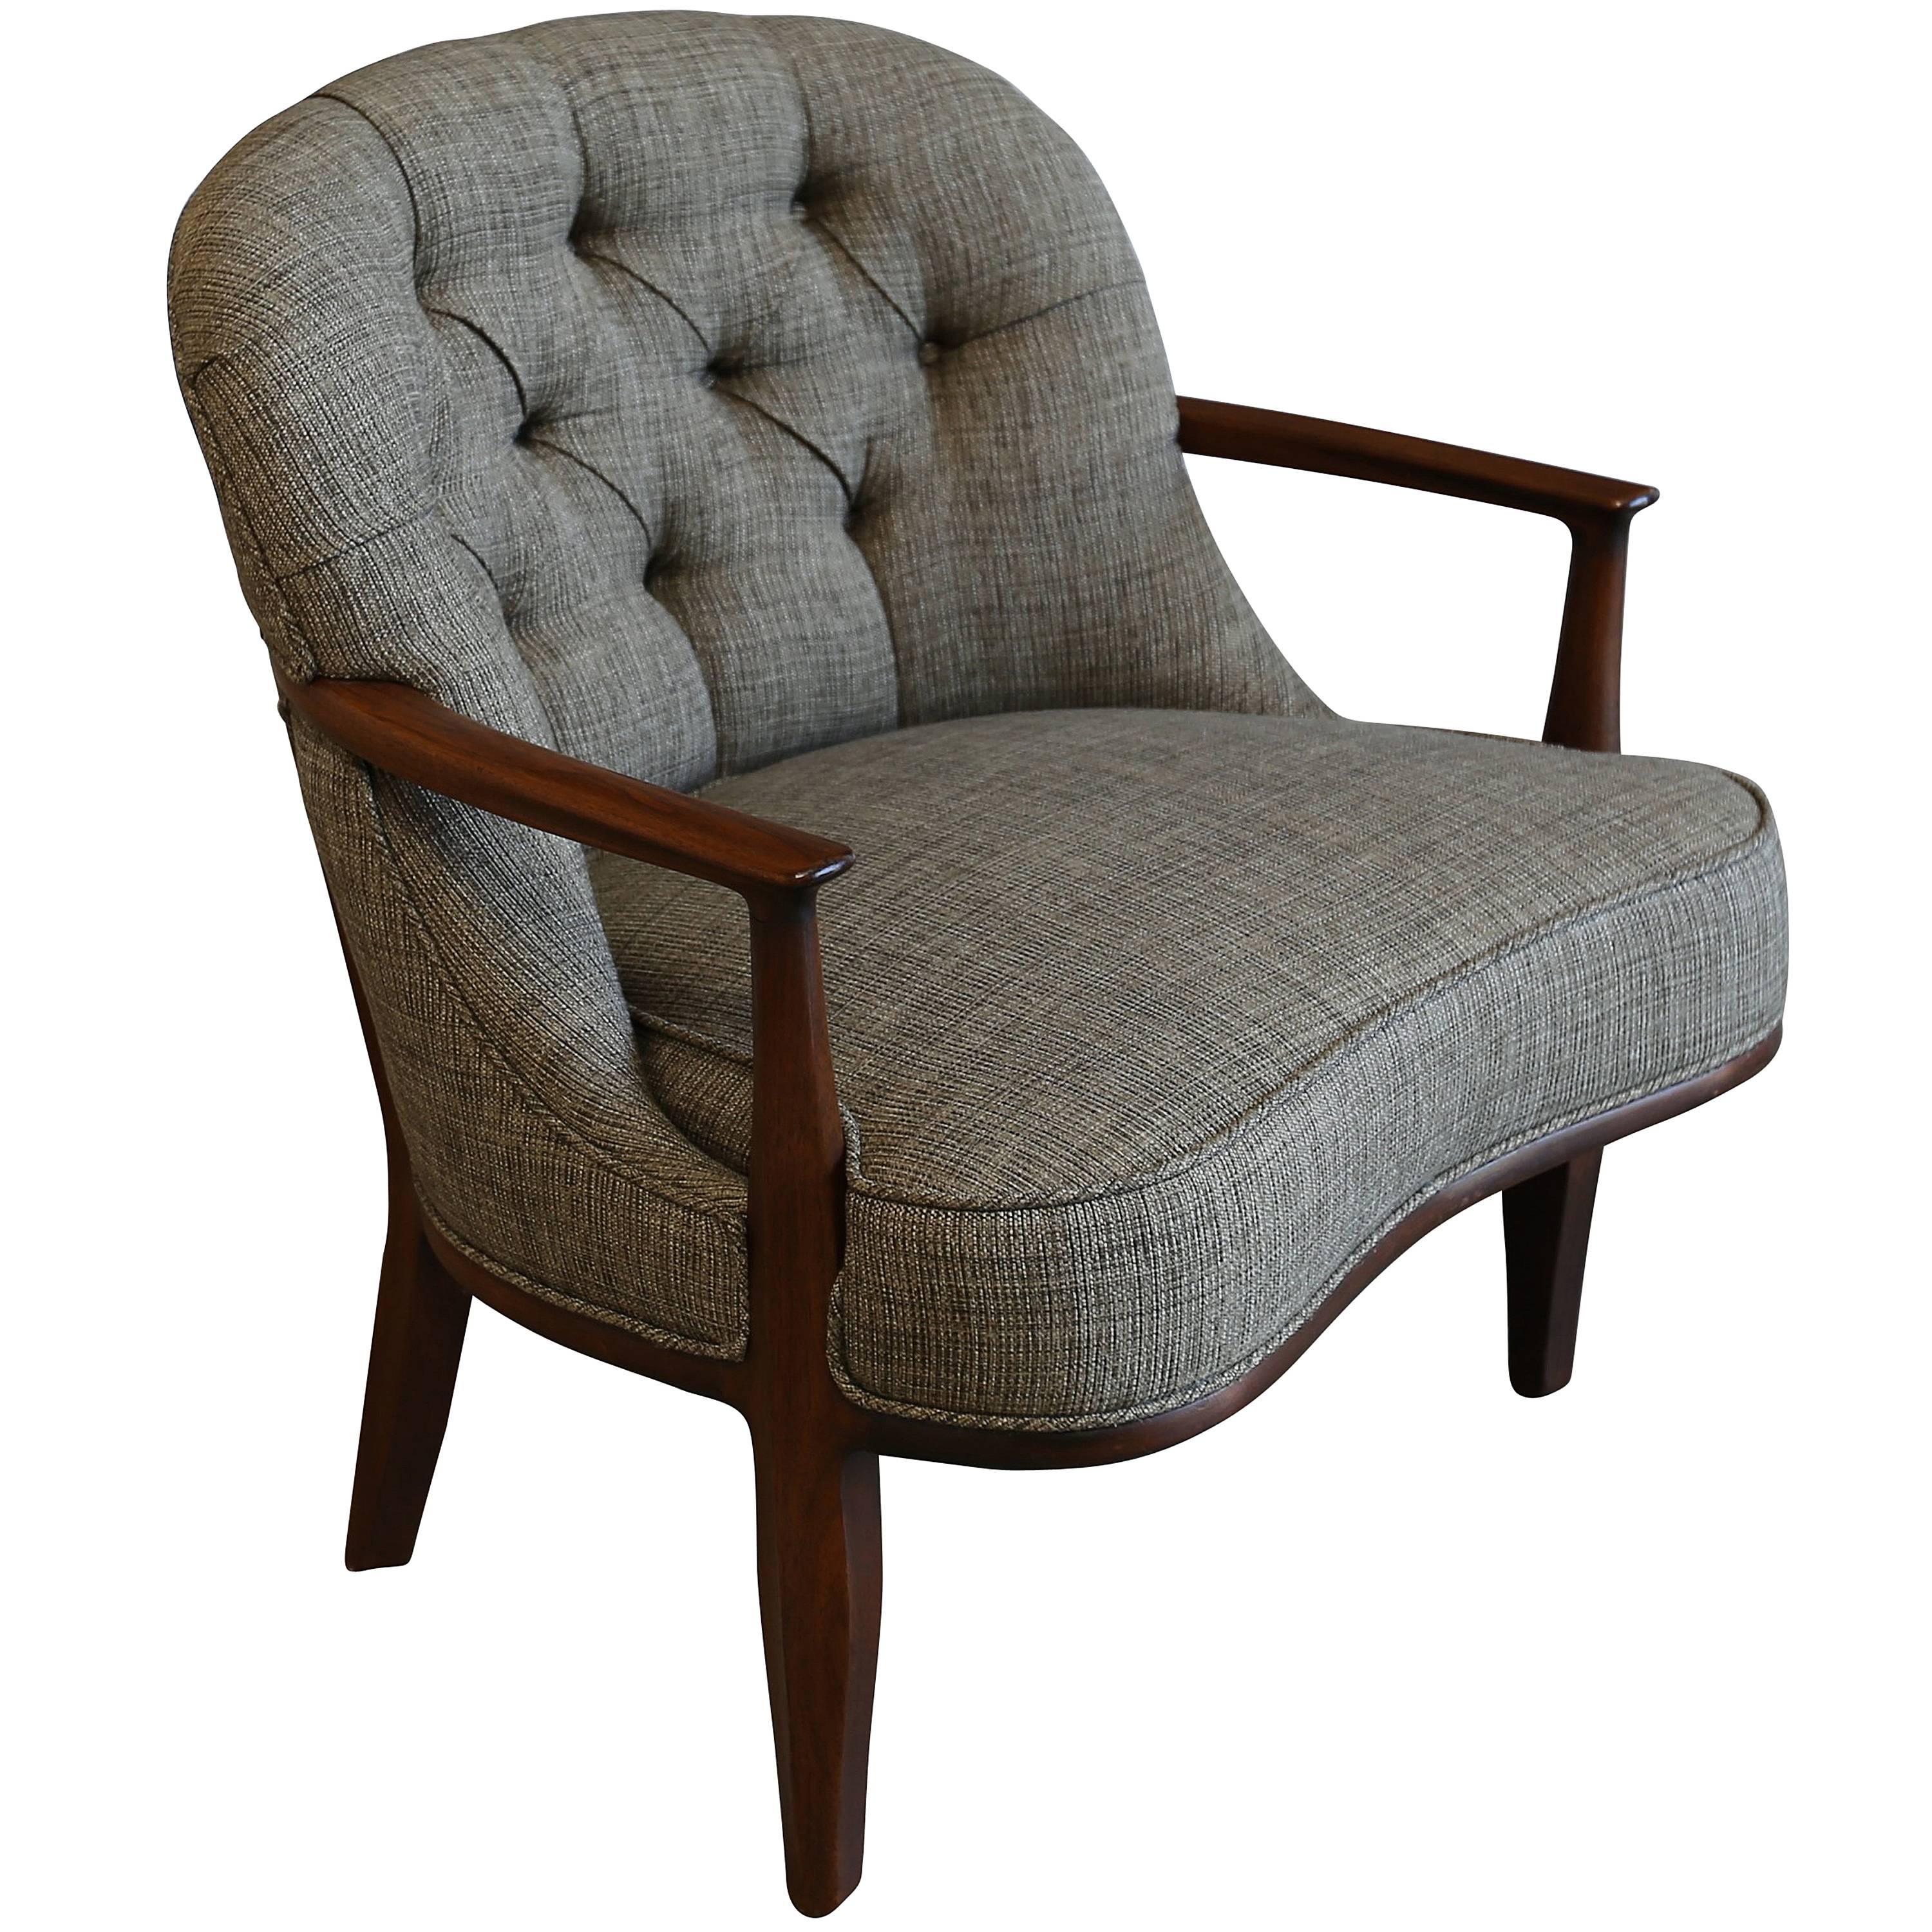 "Janus" Lounge Chair by Edward Wormley for Dunbar